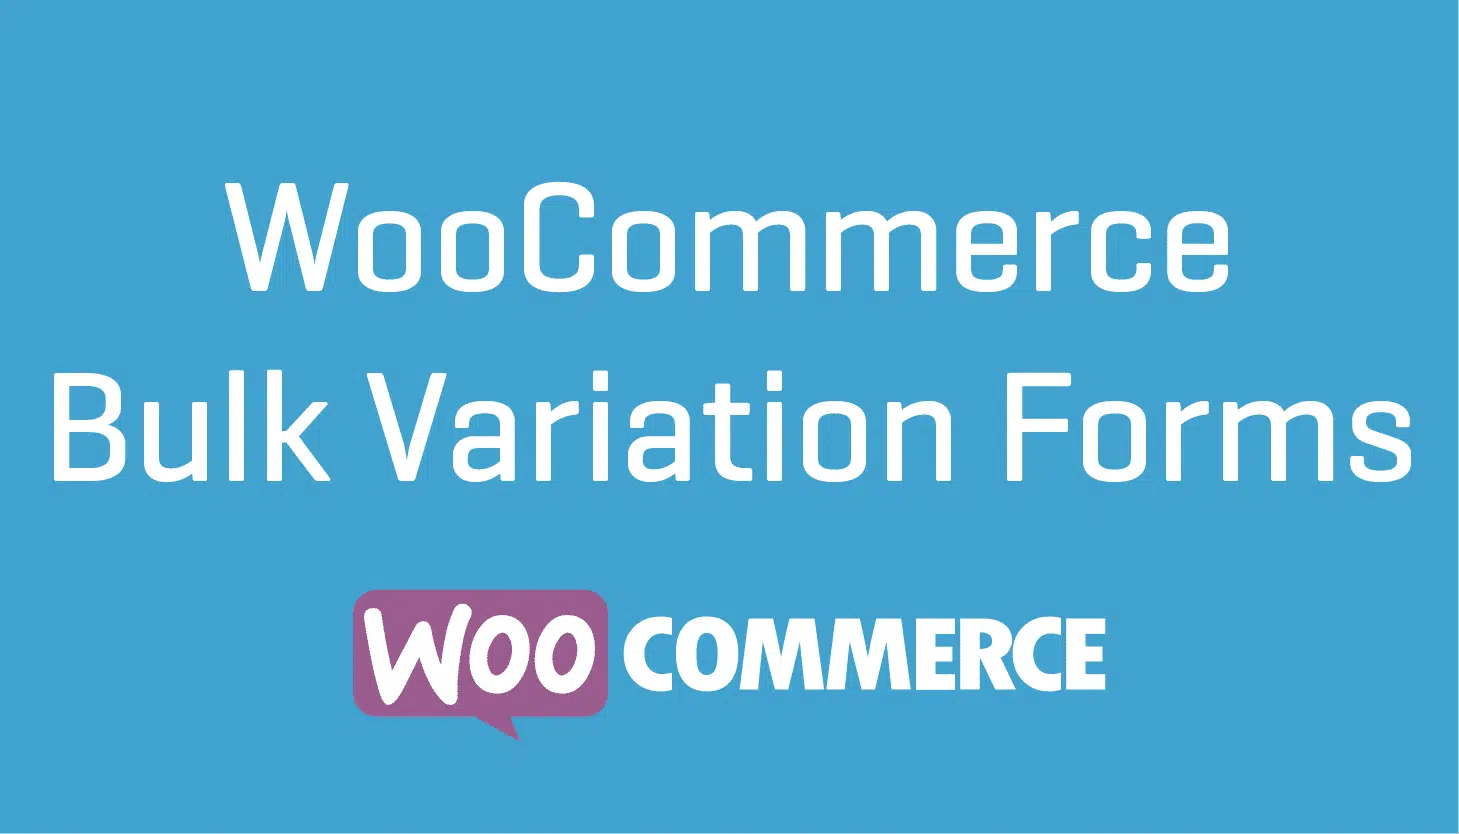 Bulk Variation Forms for WooCommerce 1.6.8